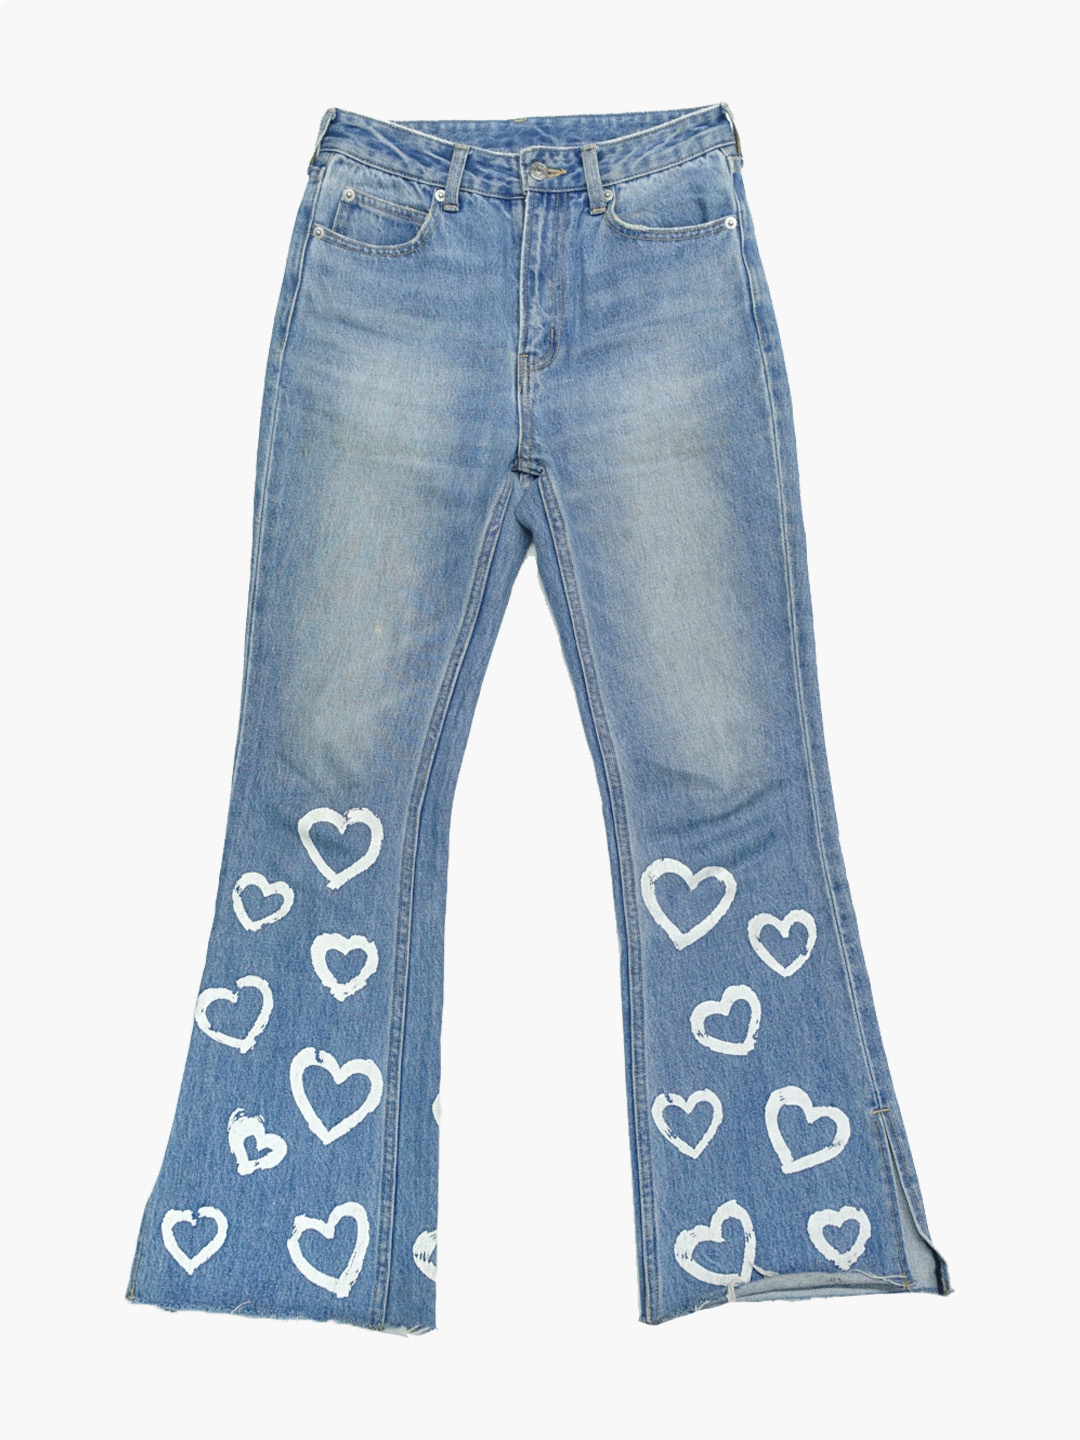 XGIRLHeart boots cut jeans